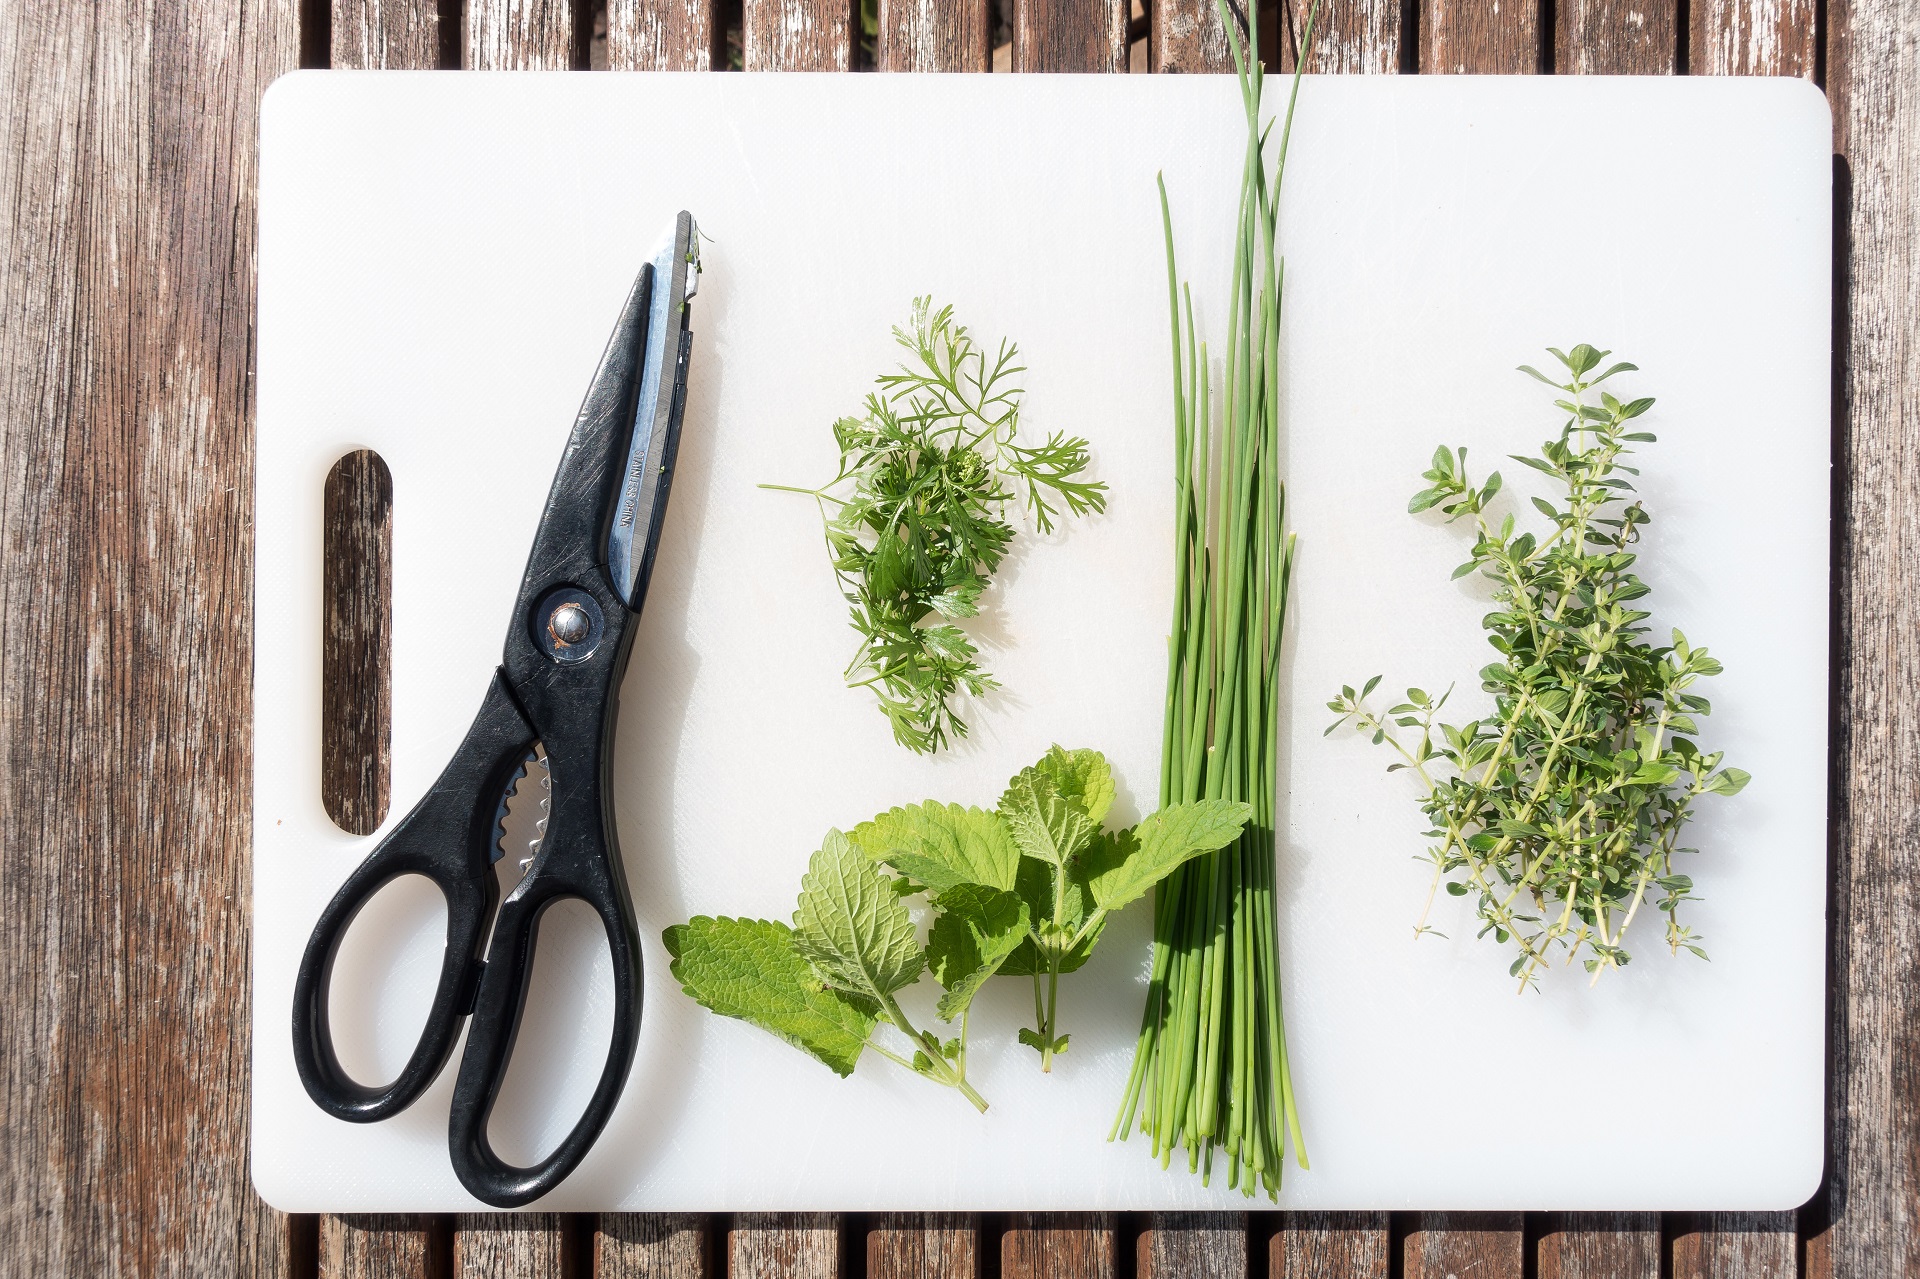 Herbs add flavor to salads. 